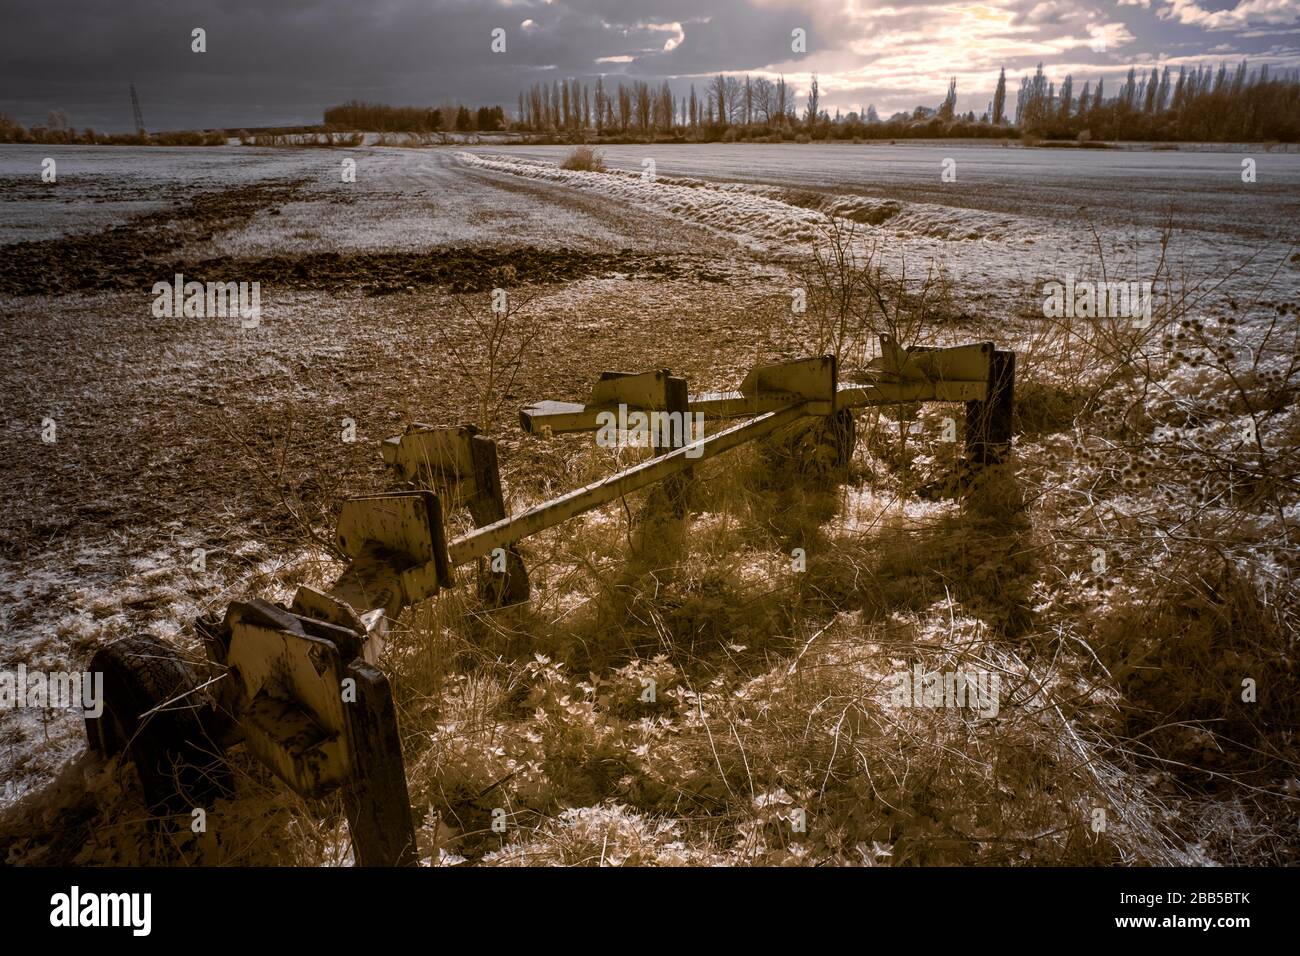 Abandoned farm machinery, image taken in near infrared (720nm), Warwickshire, UK Stock Photo